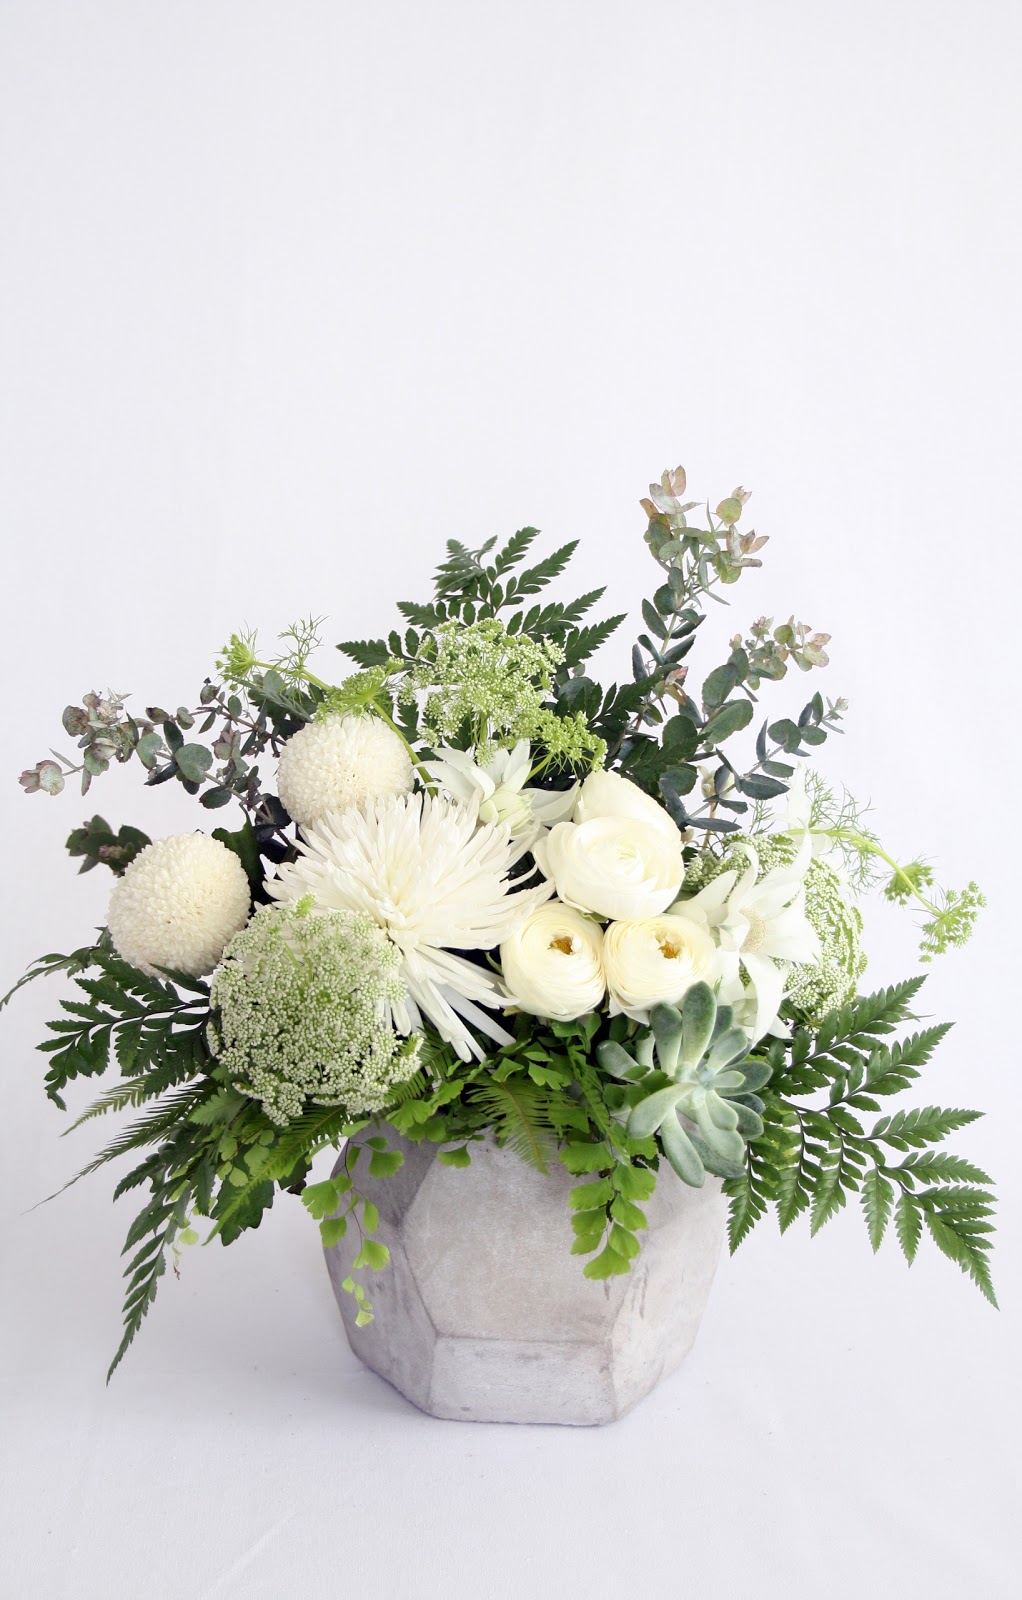 The White Orchid Floral Design | Hilton Plaza SA 5033, Australia | Phone: 0438 389 975